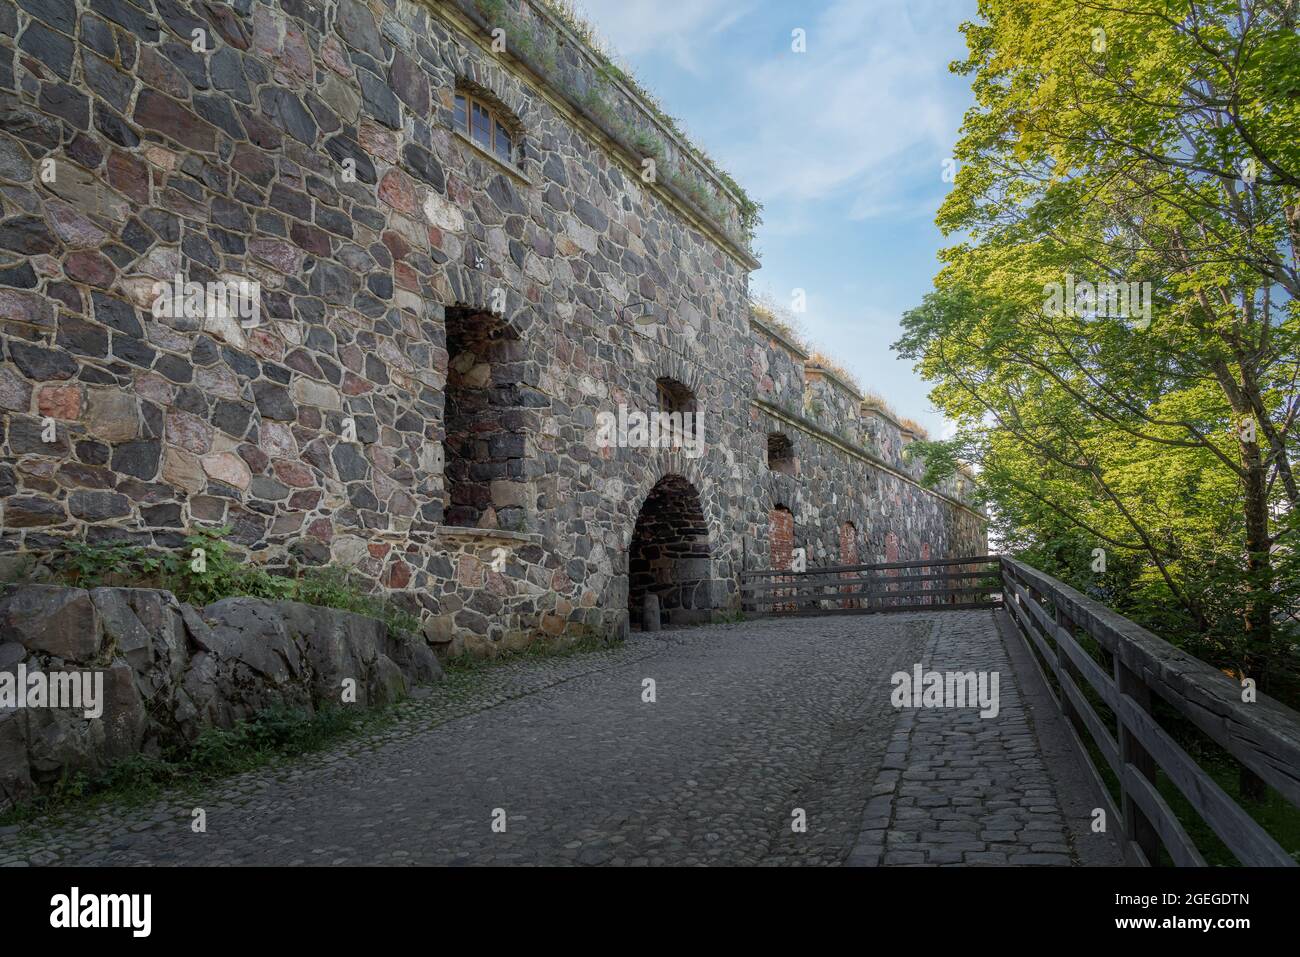 Murs de la forteresse de Suomenlinna - Helsinki, Finlande Banque D'Images